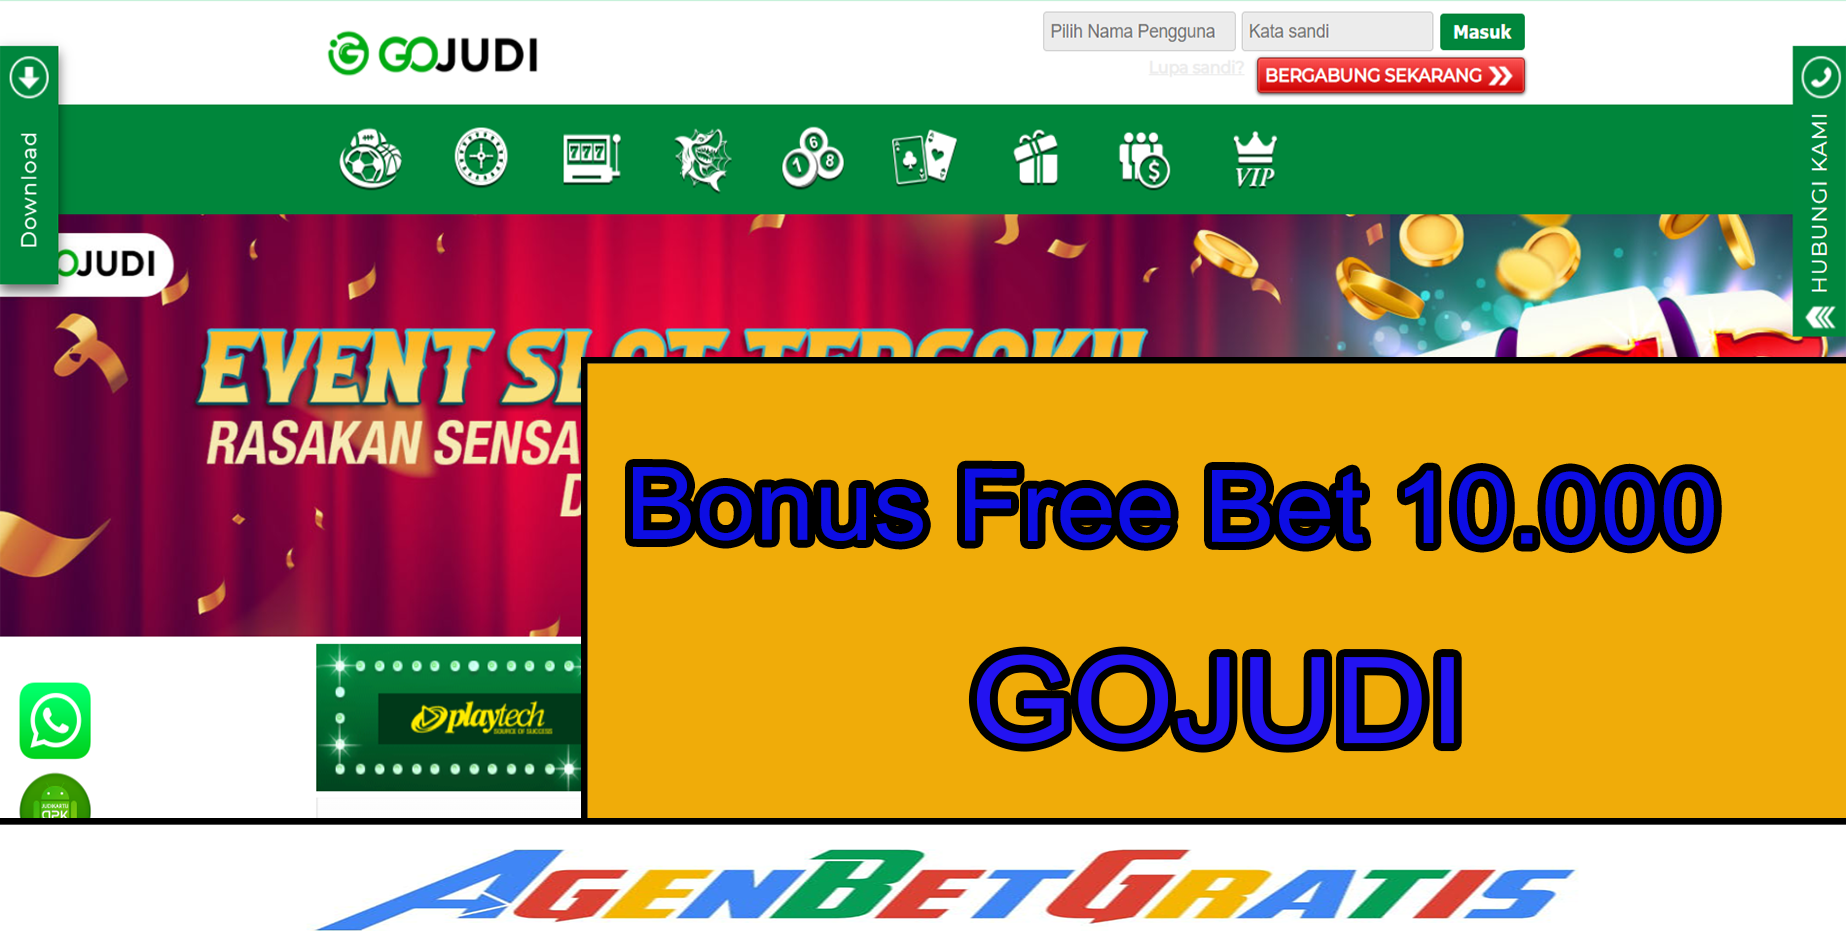 GOJUDI - Bonus FreeBet 10.000